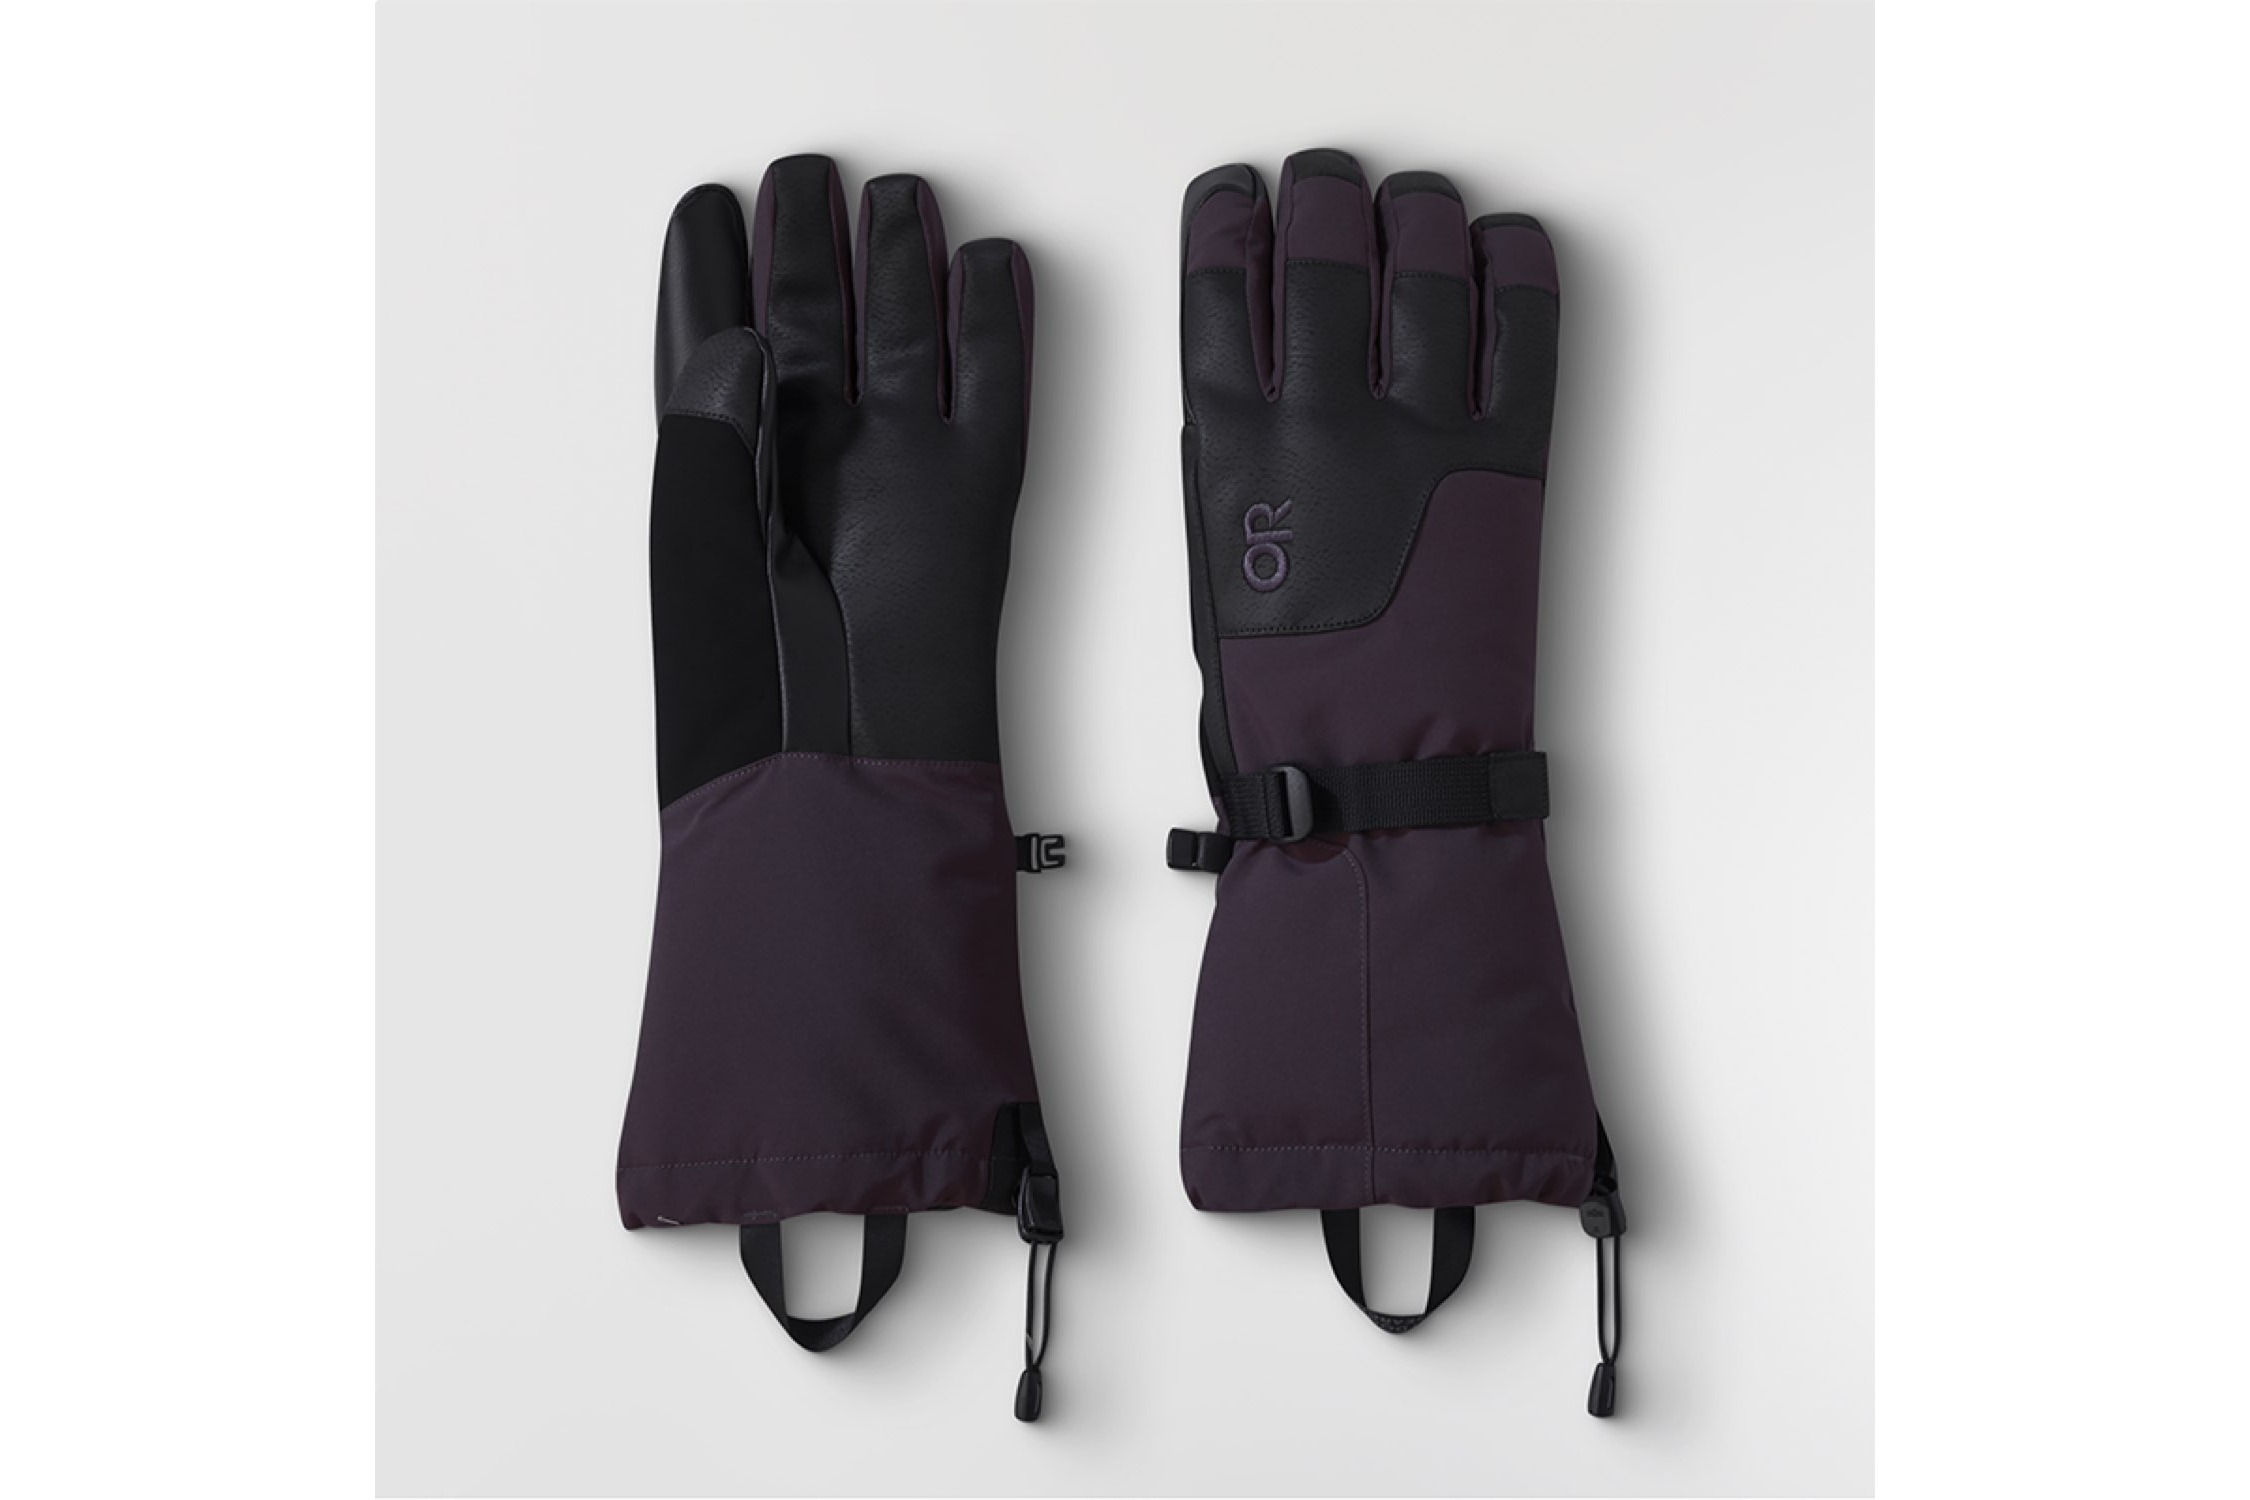 Outdoor Research Women's Revolution Sensor Gloves